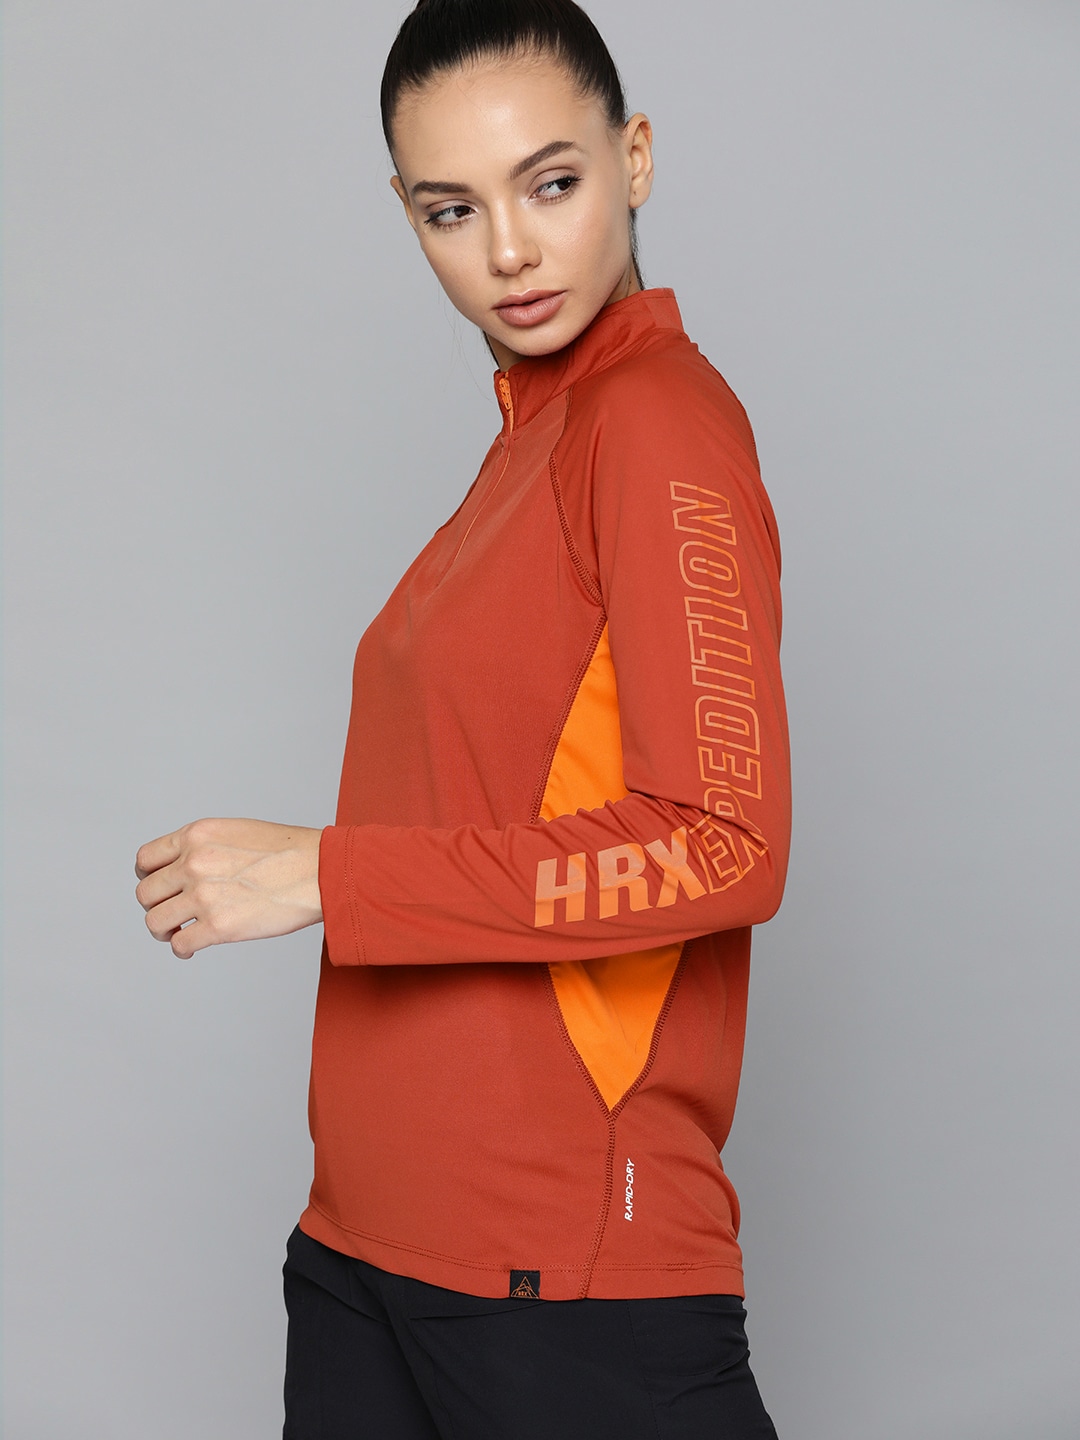 HRX by Hrithik Roshan Women Bassa Nova Brand Logo Printed Rapid-Dry Outdoor T-shirt Price in India